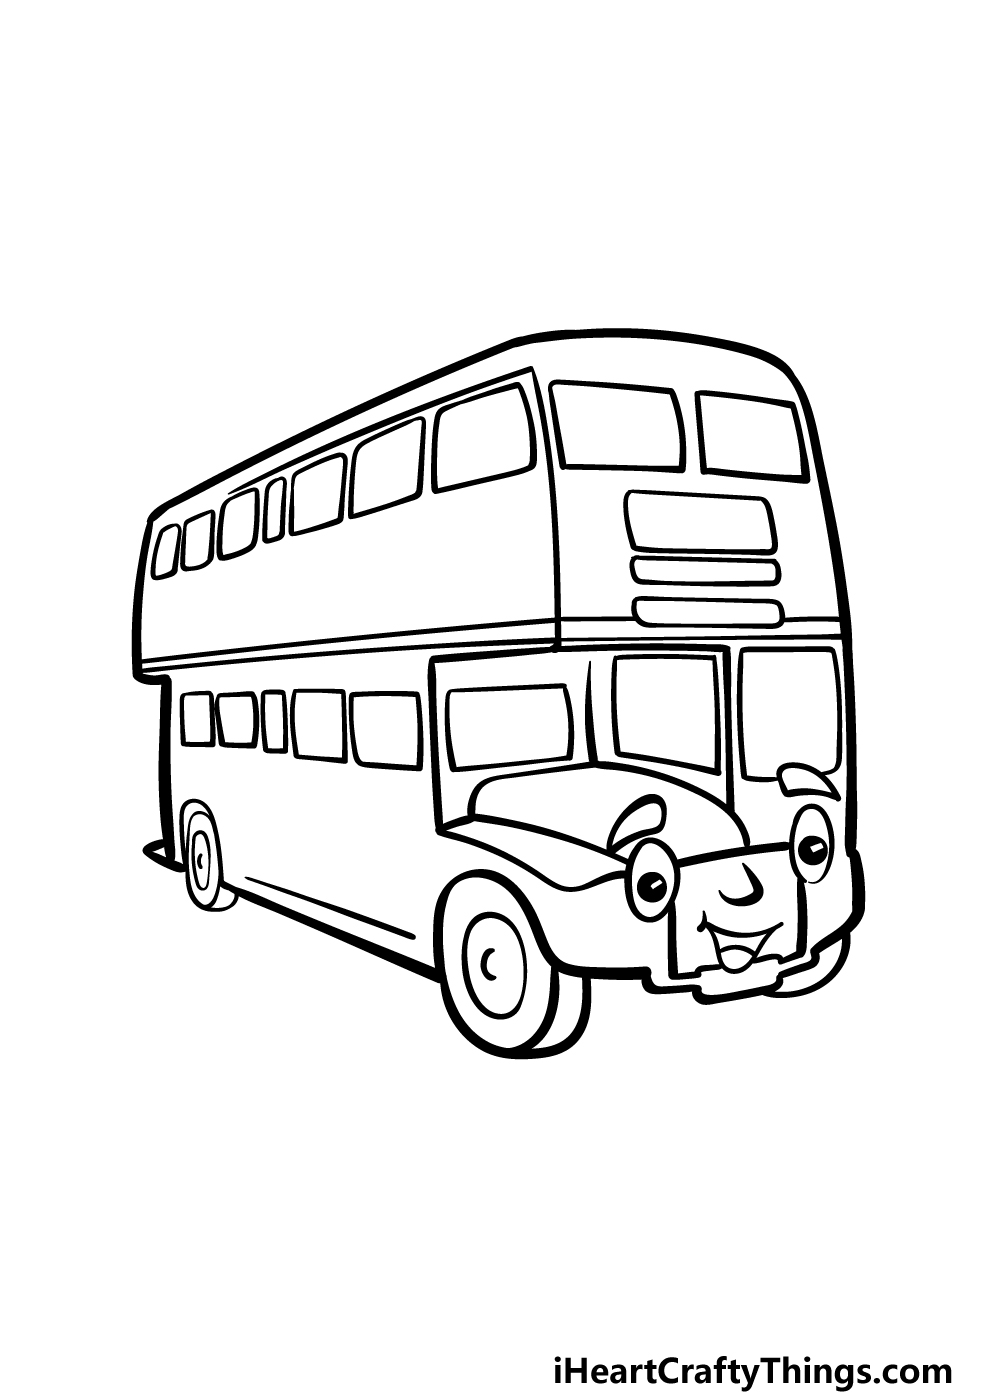 how to draw a cartoon bus step 6